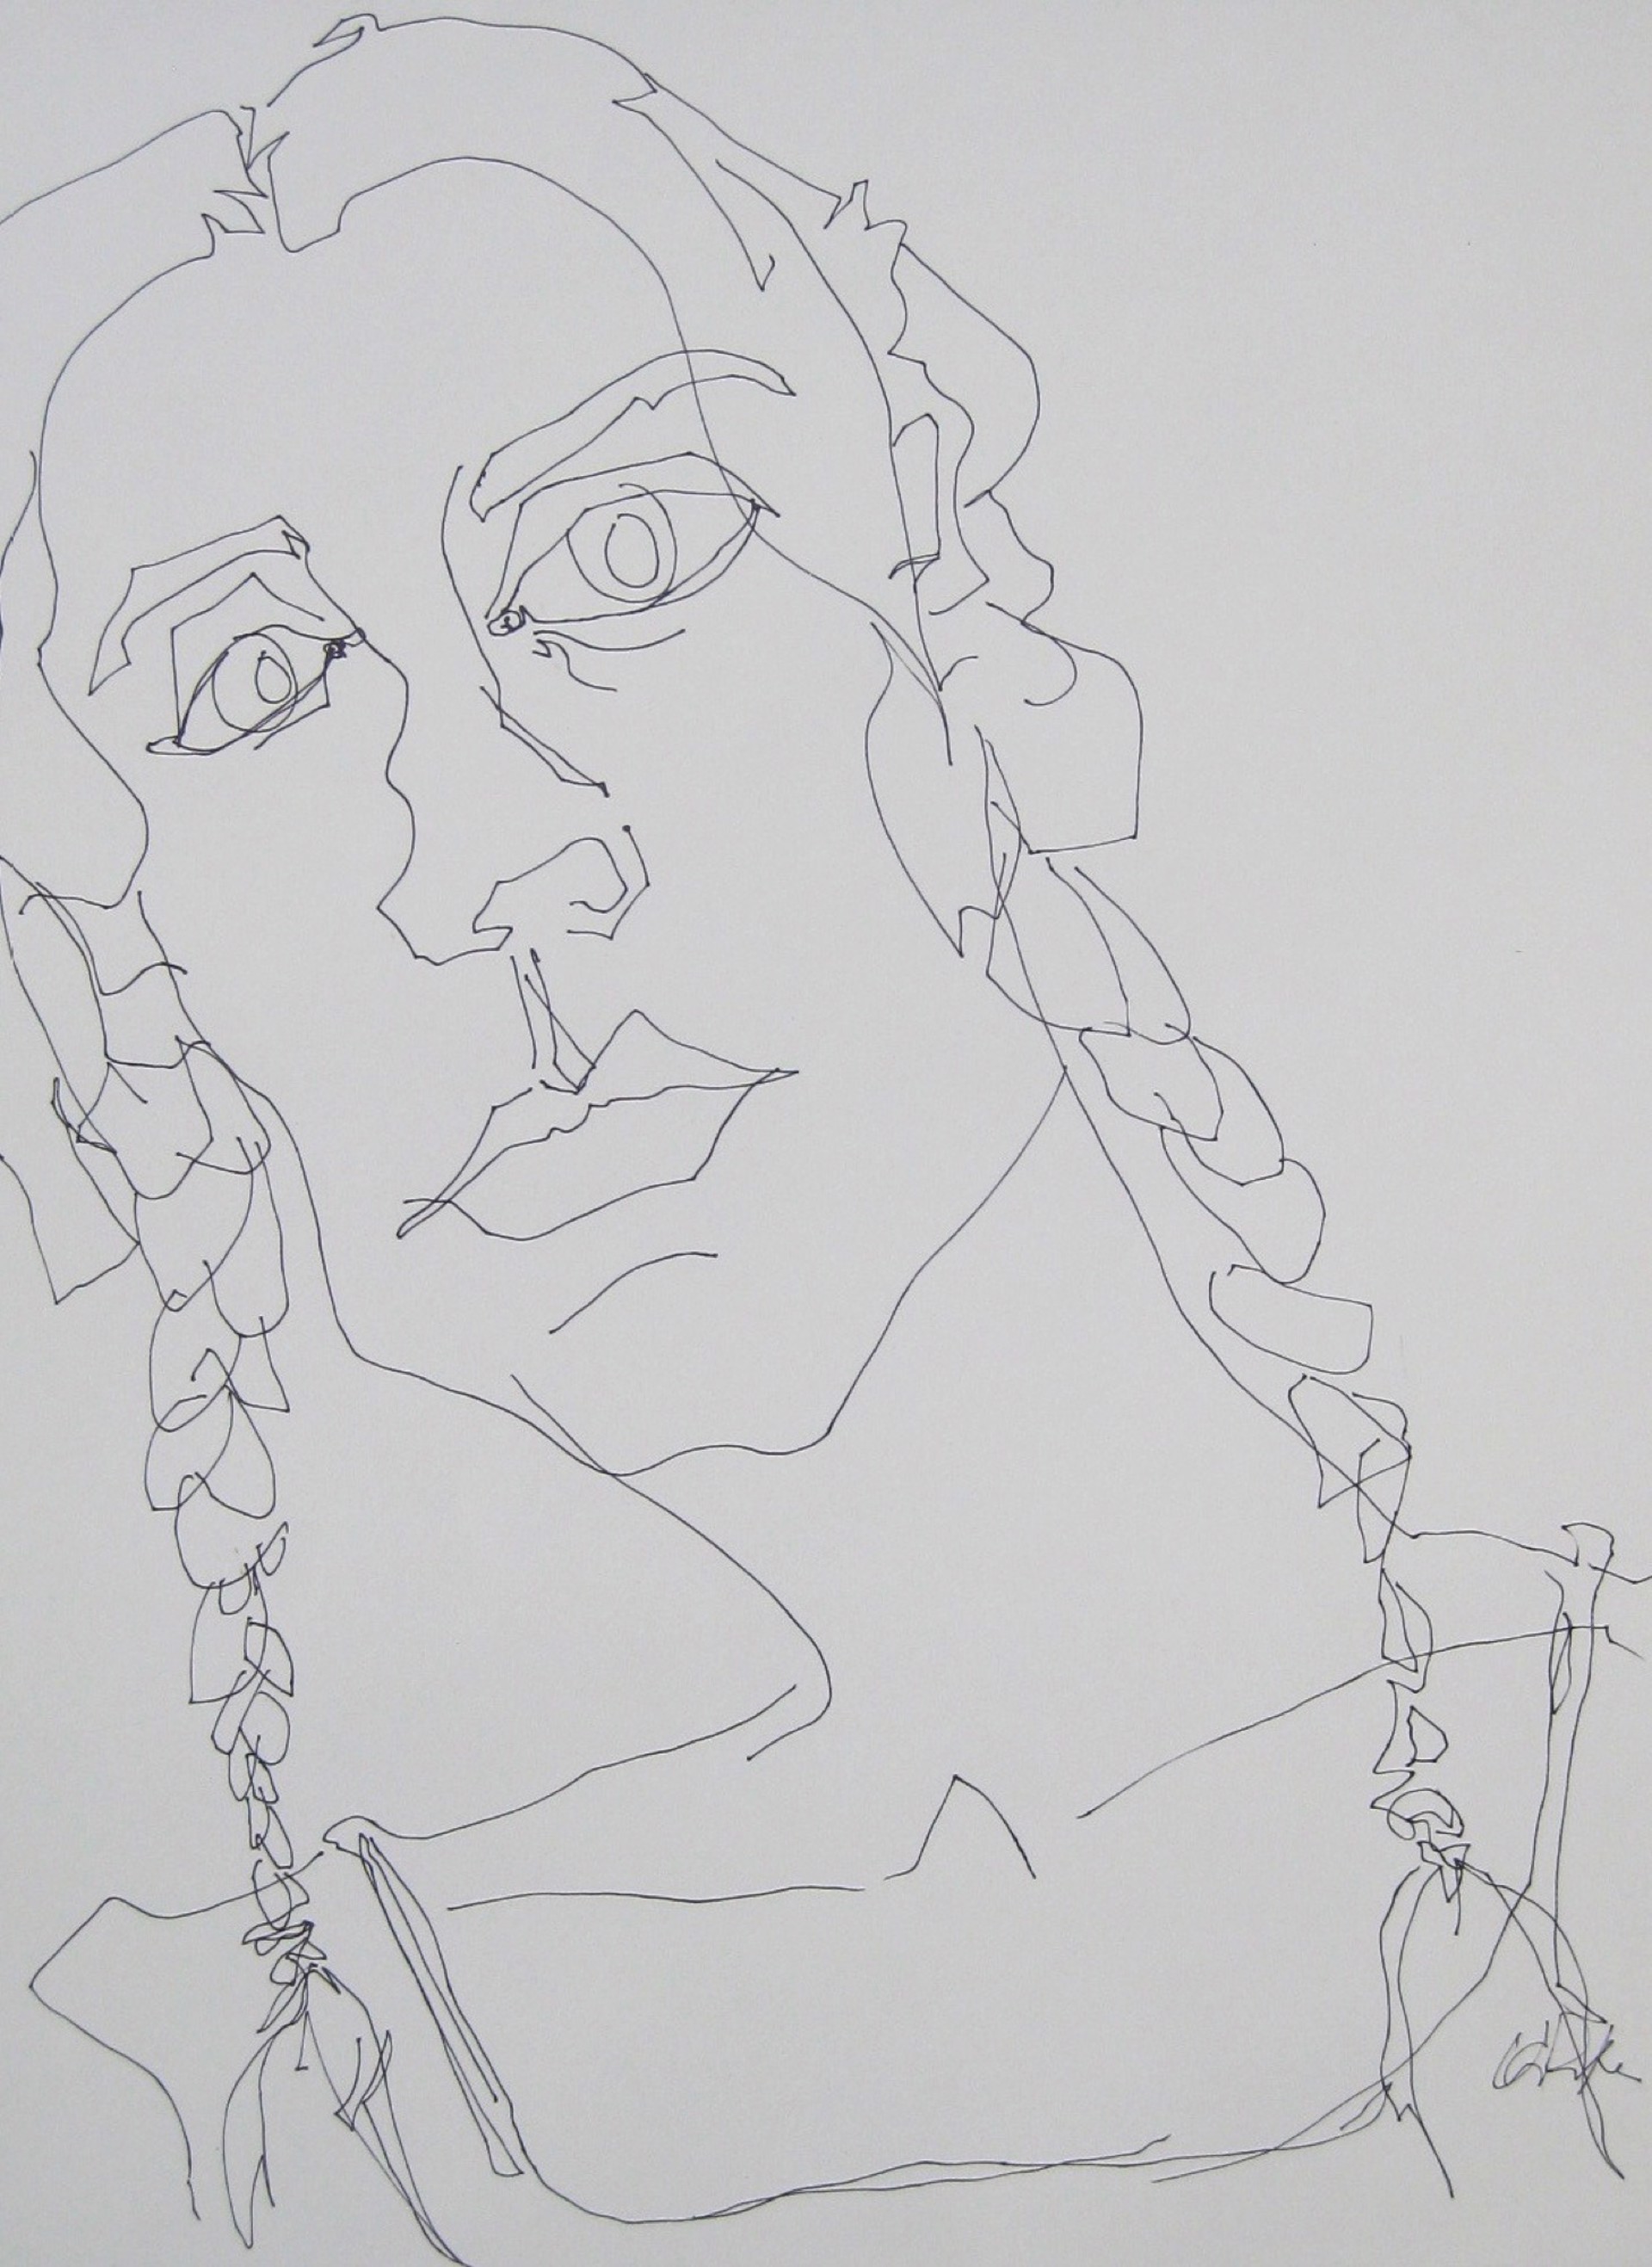 Self-Portrait with Slanted Braids by Rachael Van Dyke